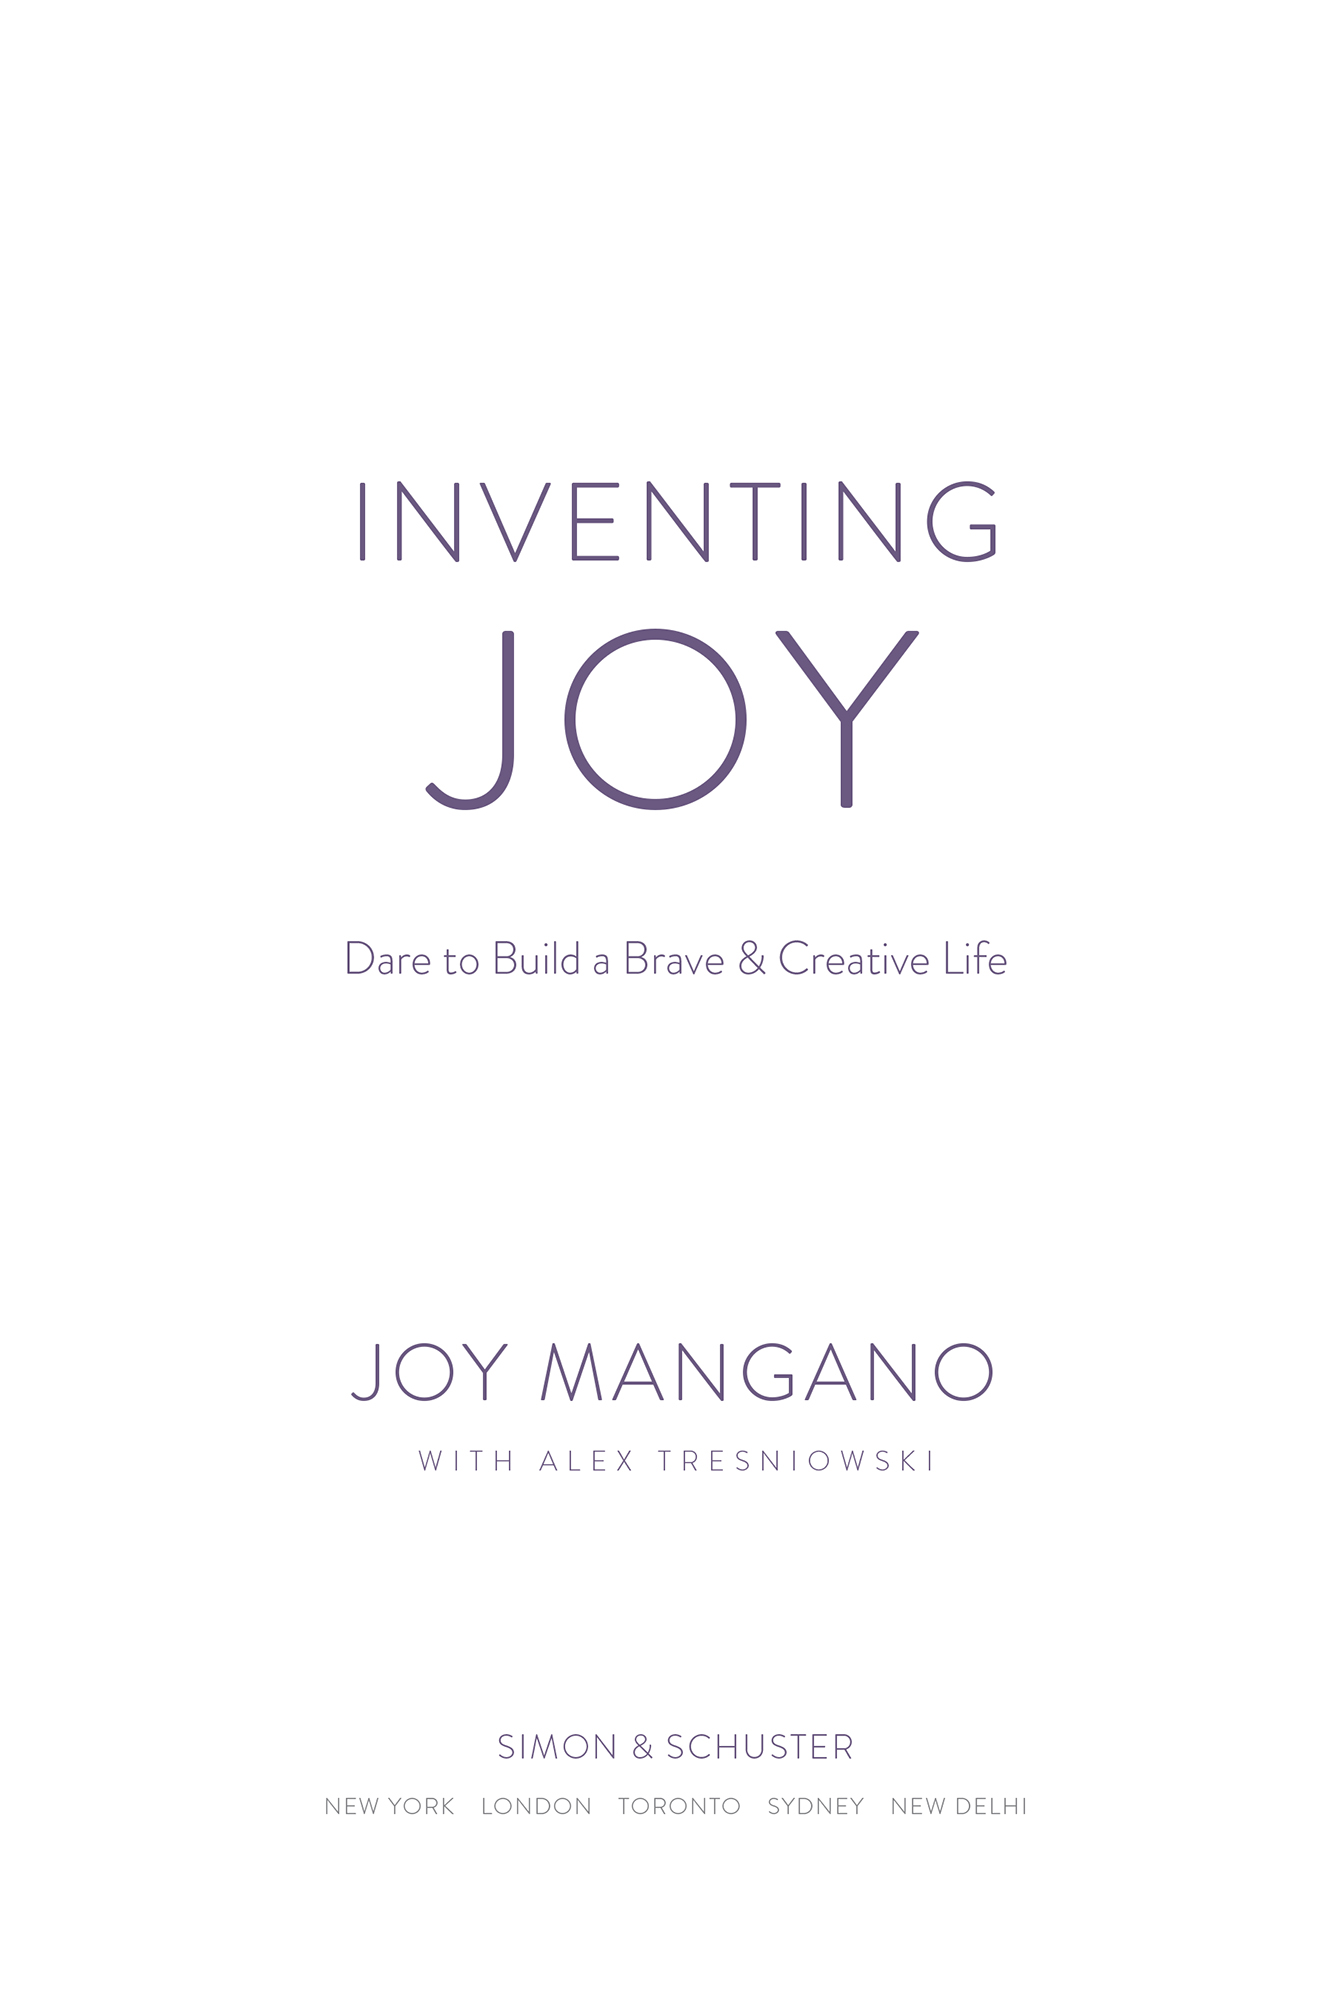 Inventing joy dare to build a brave creative life - image 1